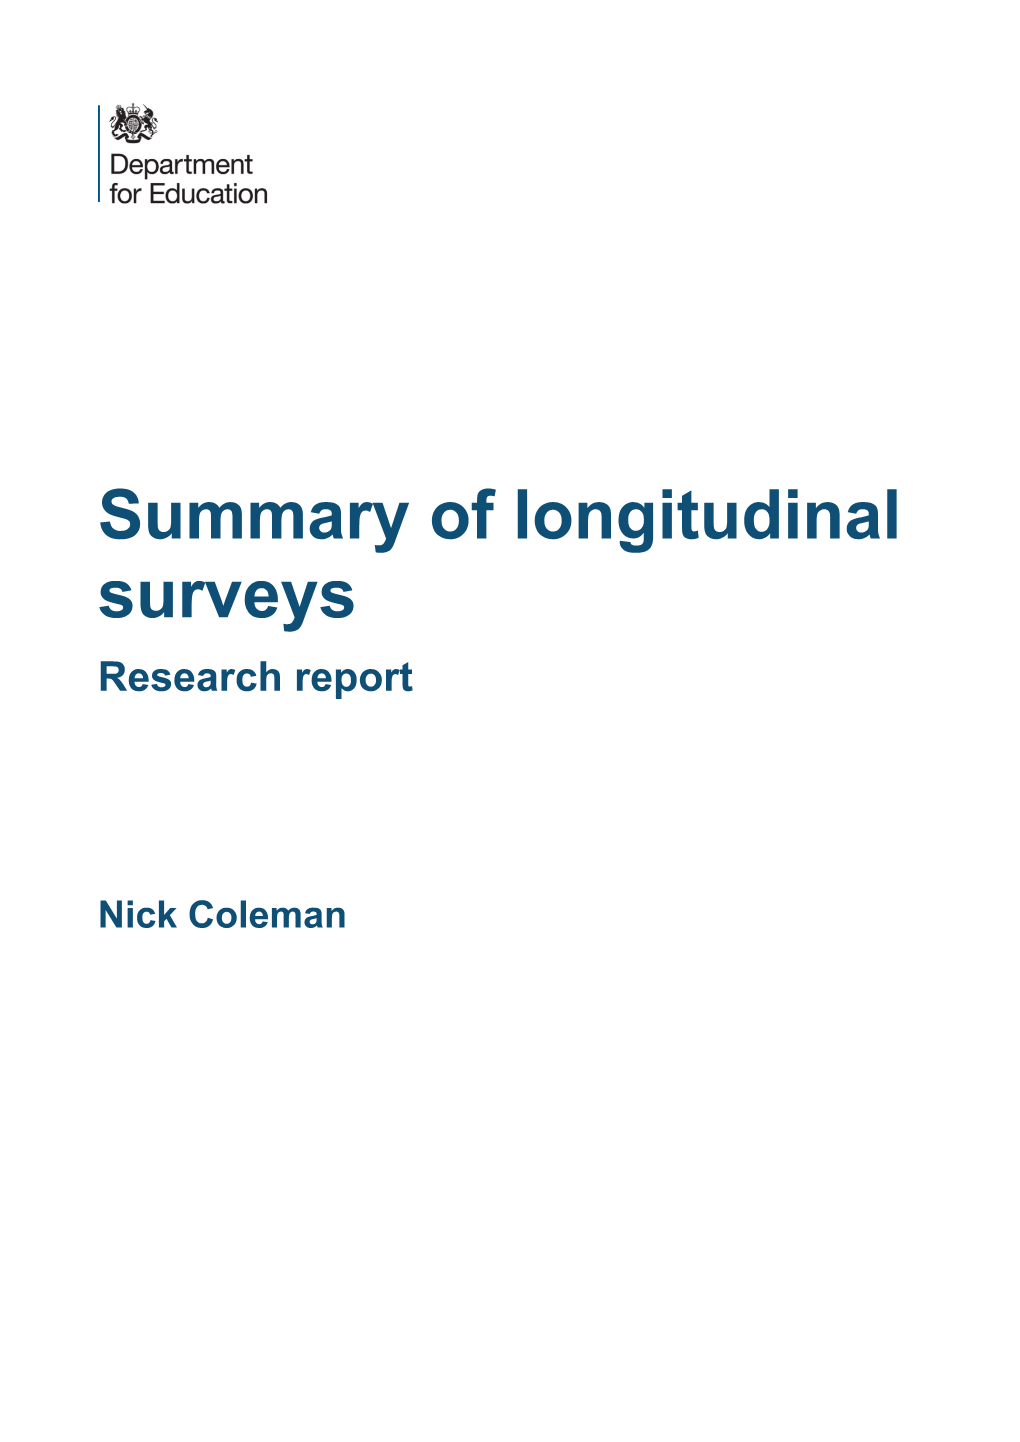 Summary of Longitudinal Surveys Research Report